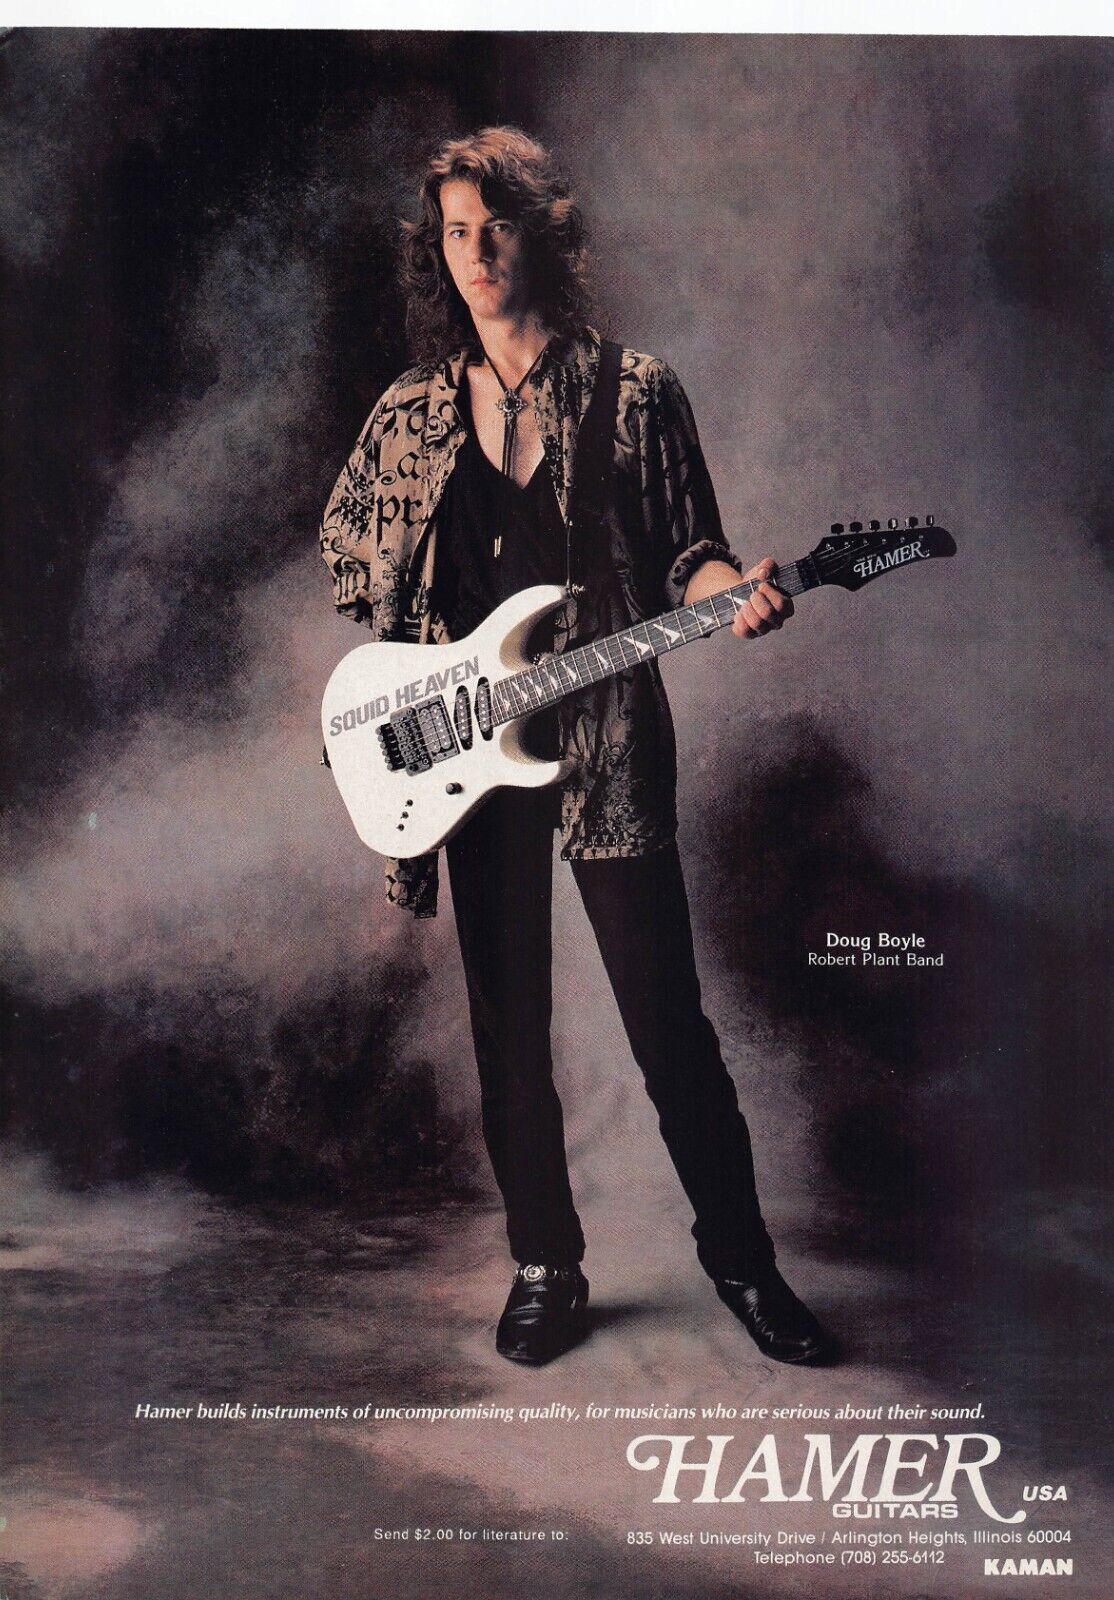 Hamer Guitars Magazine Print Ad Doug Boyle (Robert Plant Band) Endorsed